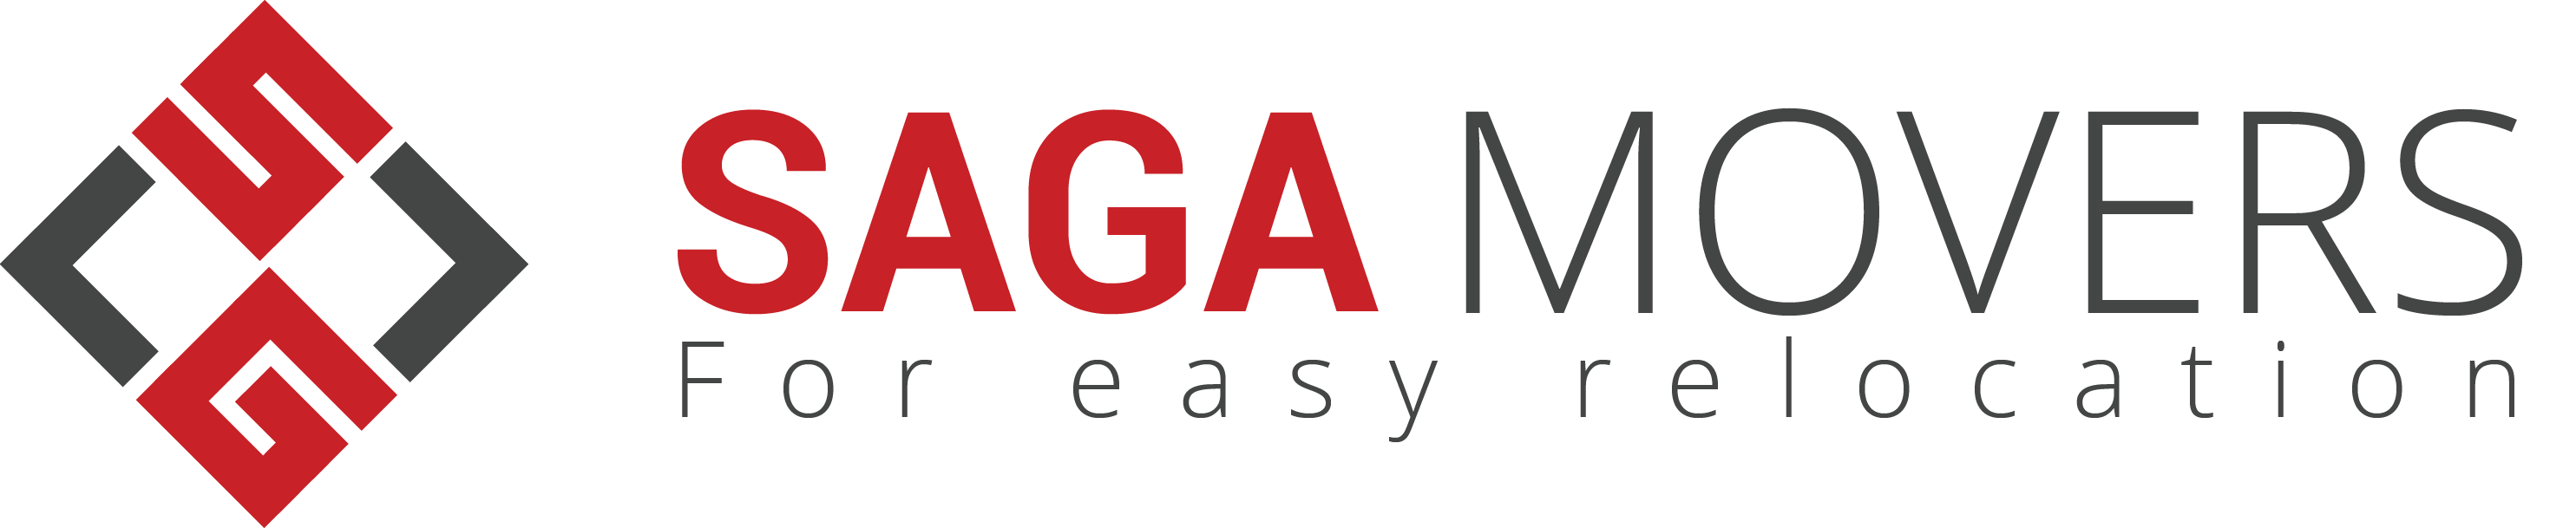 logo saga movers